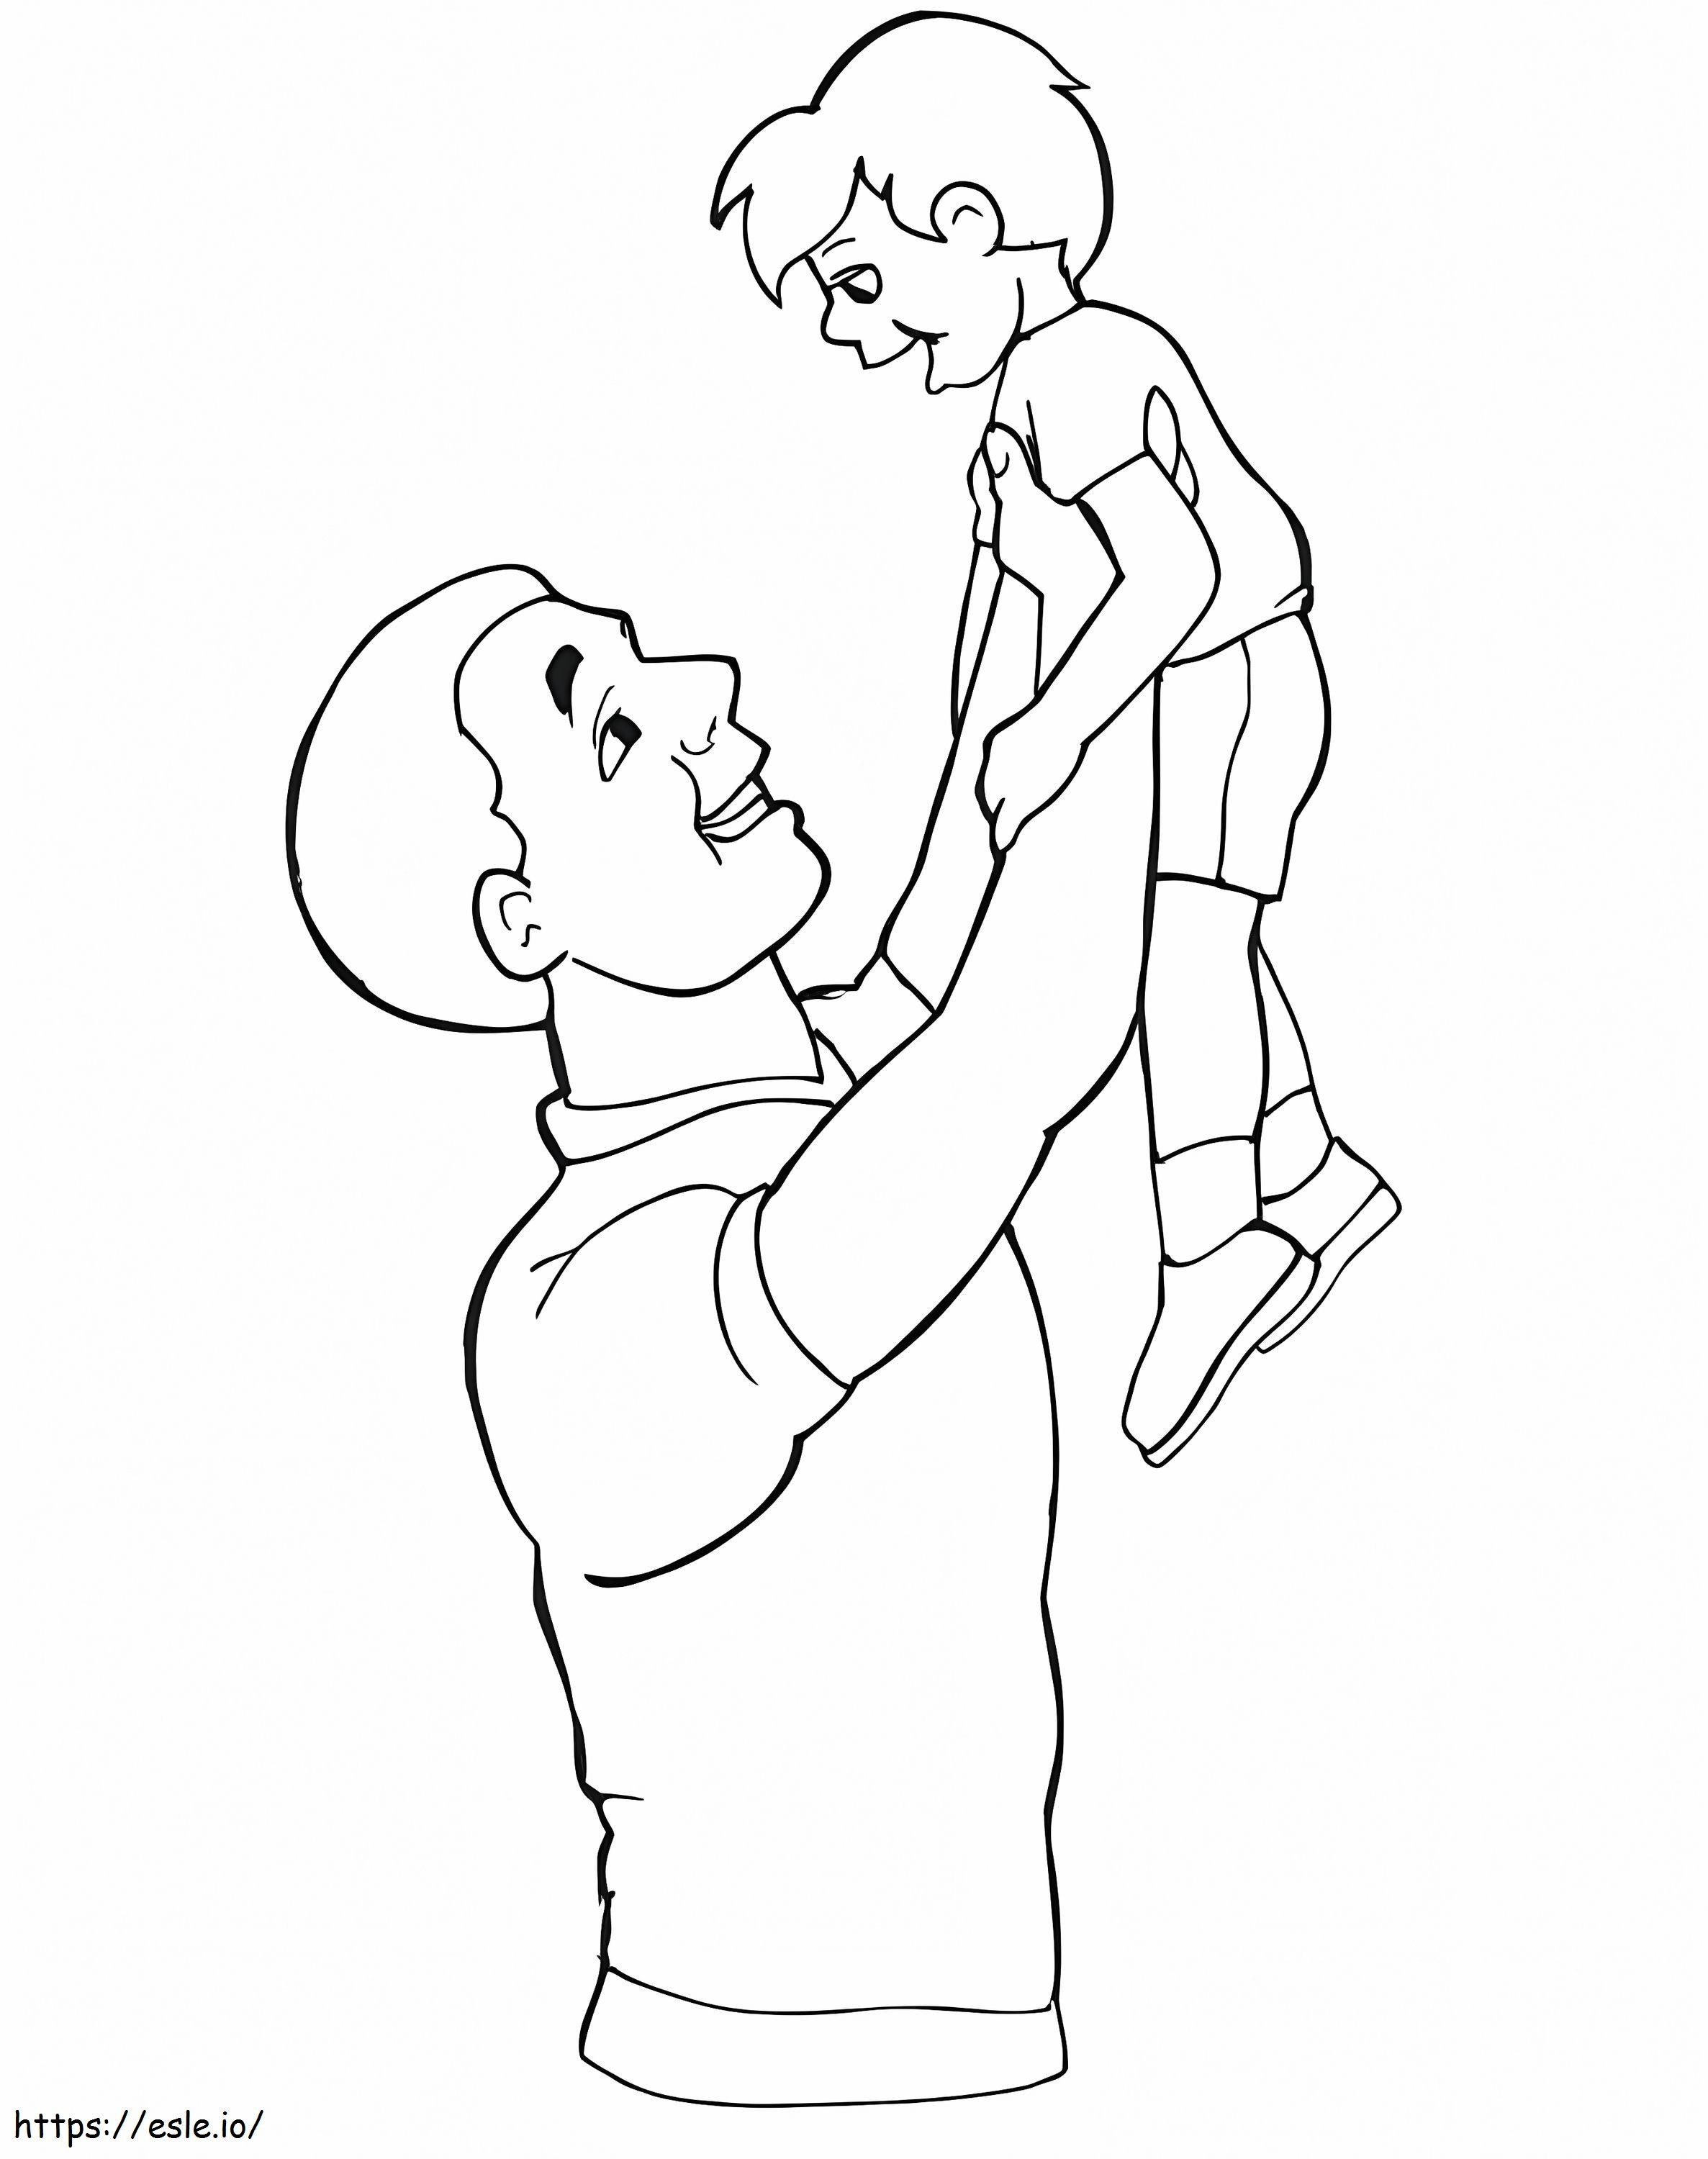 Happy Son And Dad coloring page